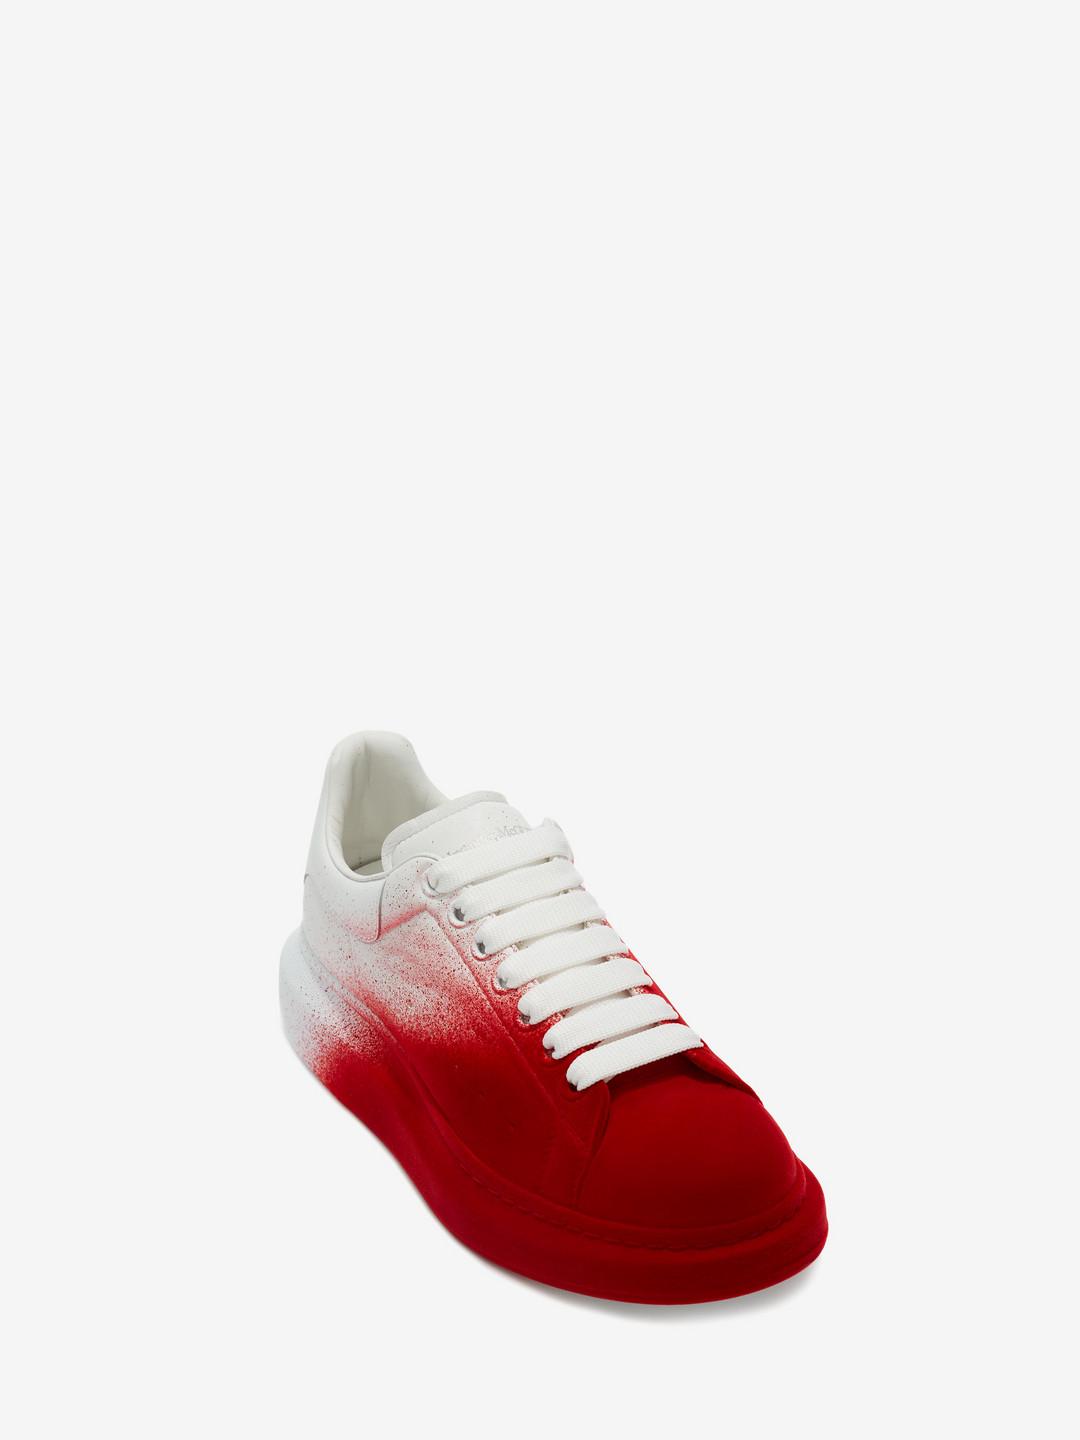 Alexander McQueen Leather Oversized Sneaker in Red for Men - Lyst